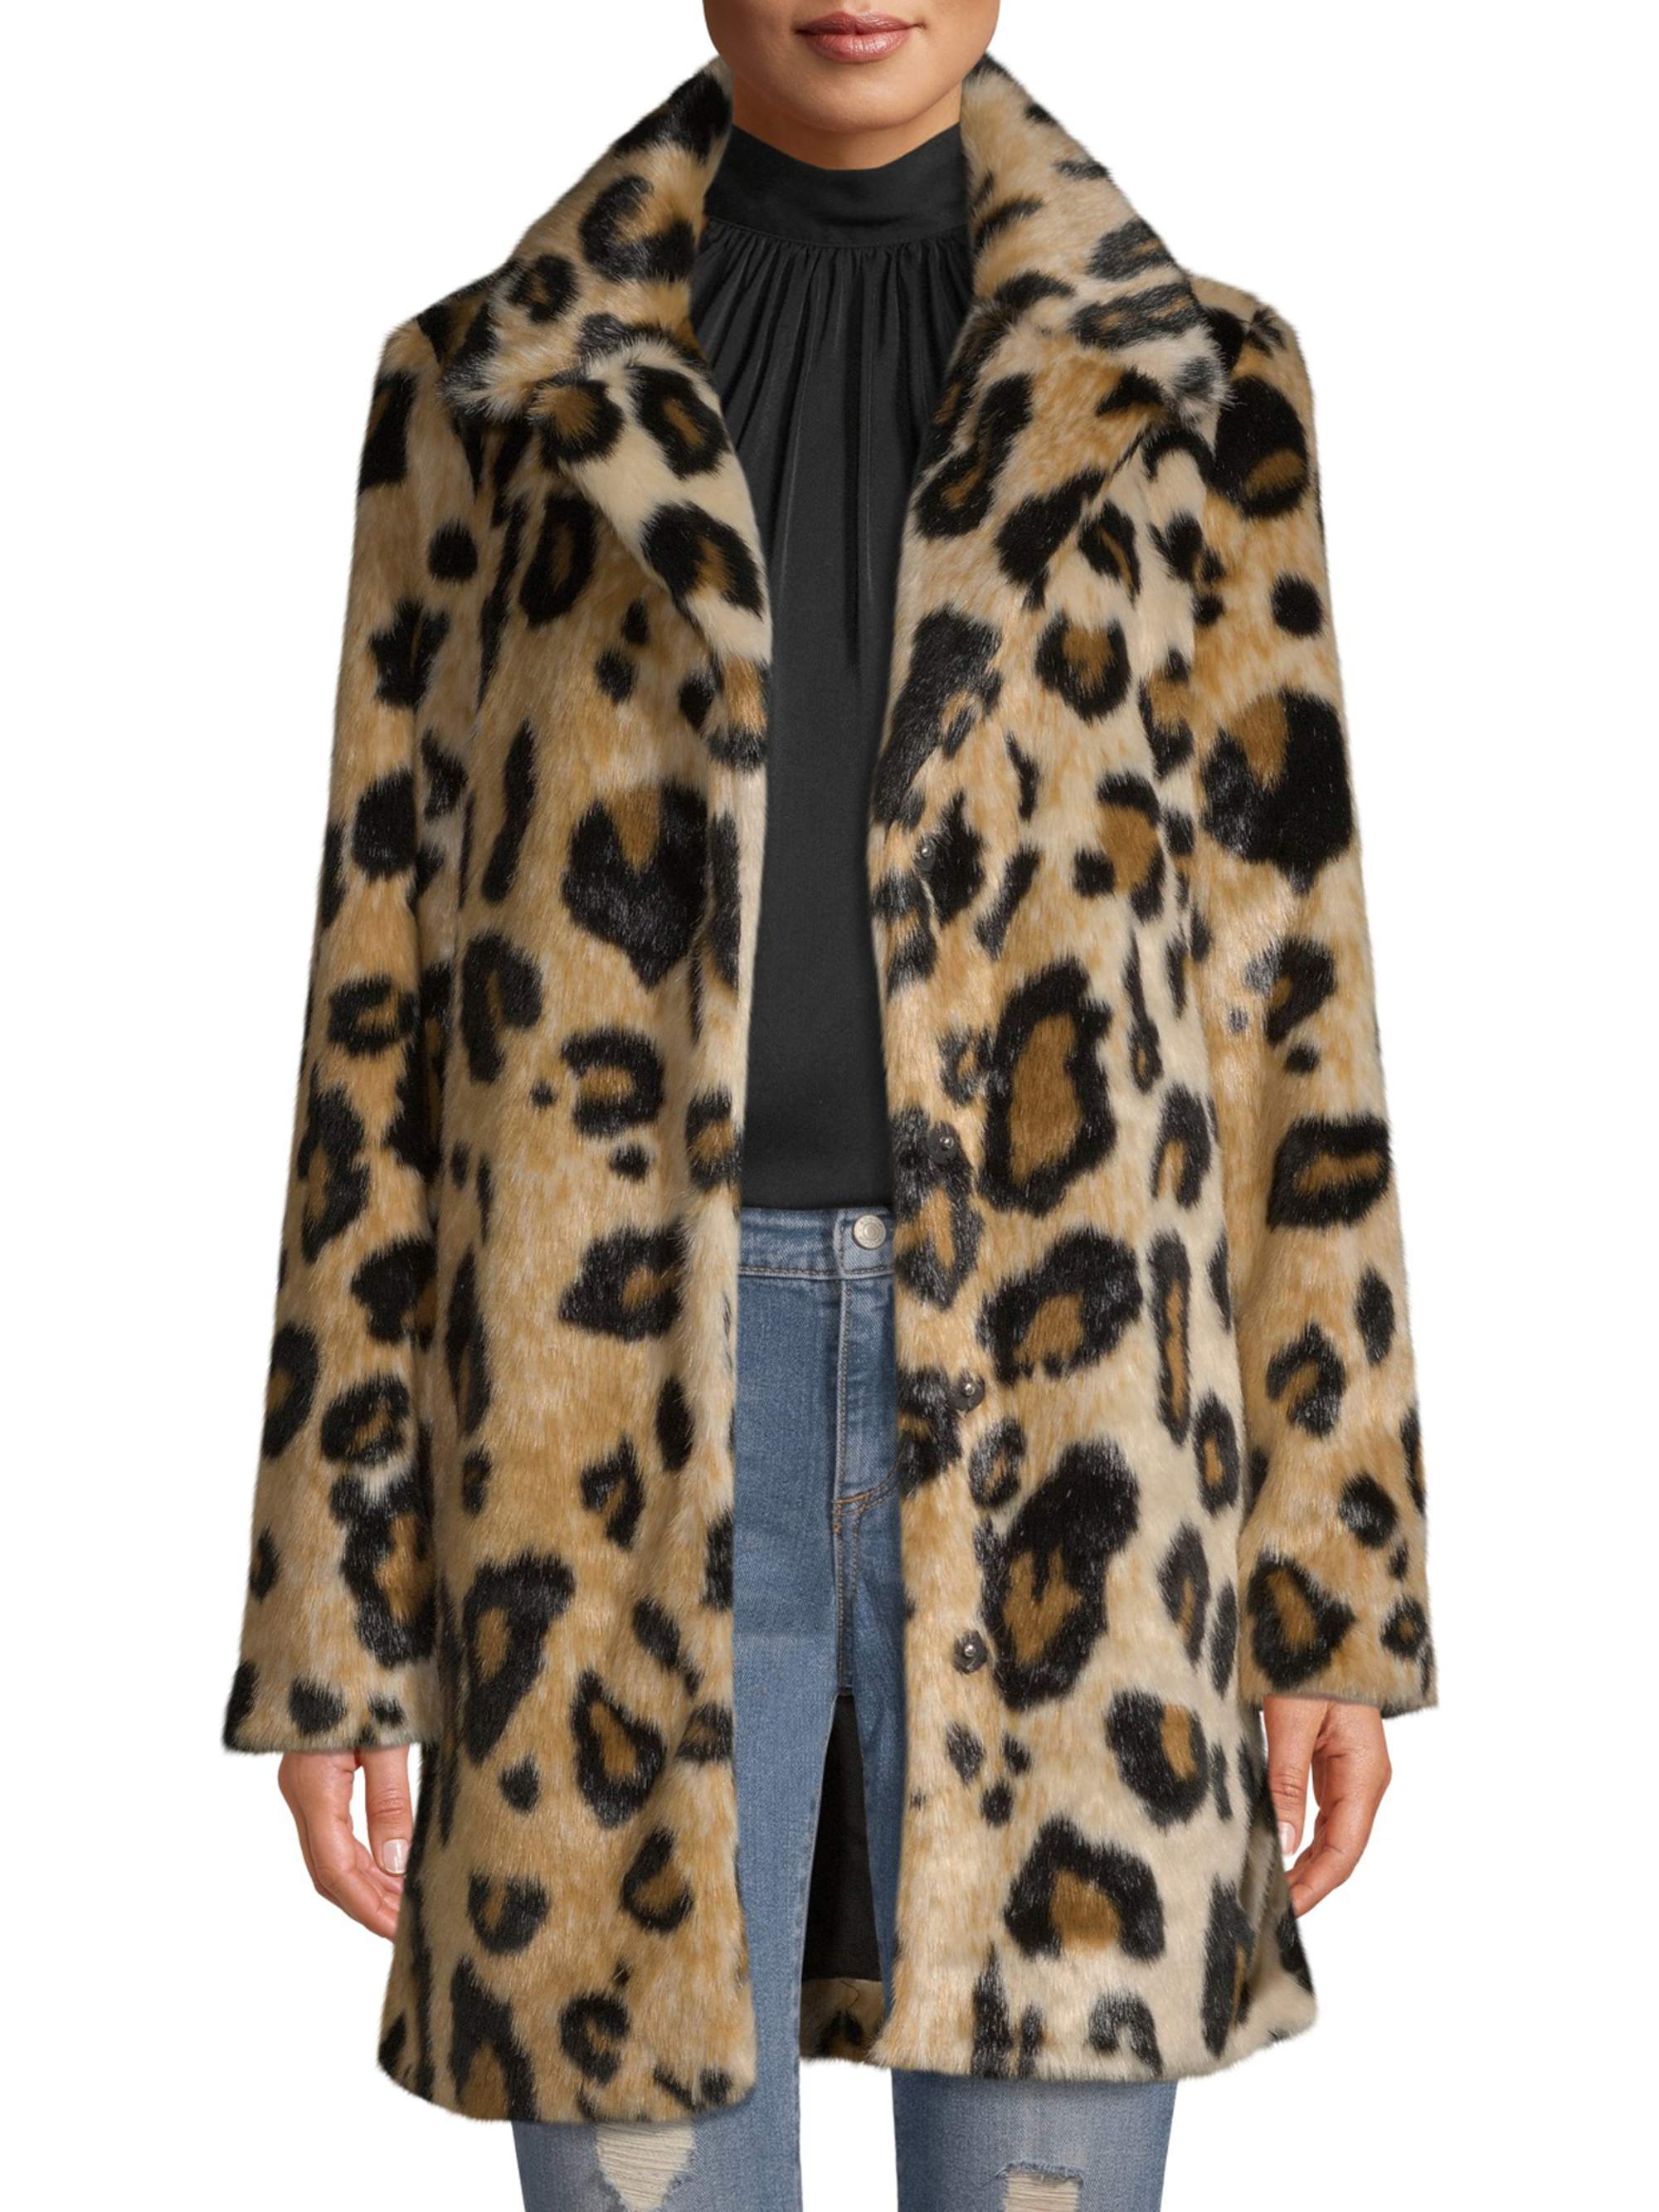 Scoop + Vegan Fur Leopard Printed Coat